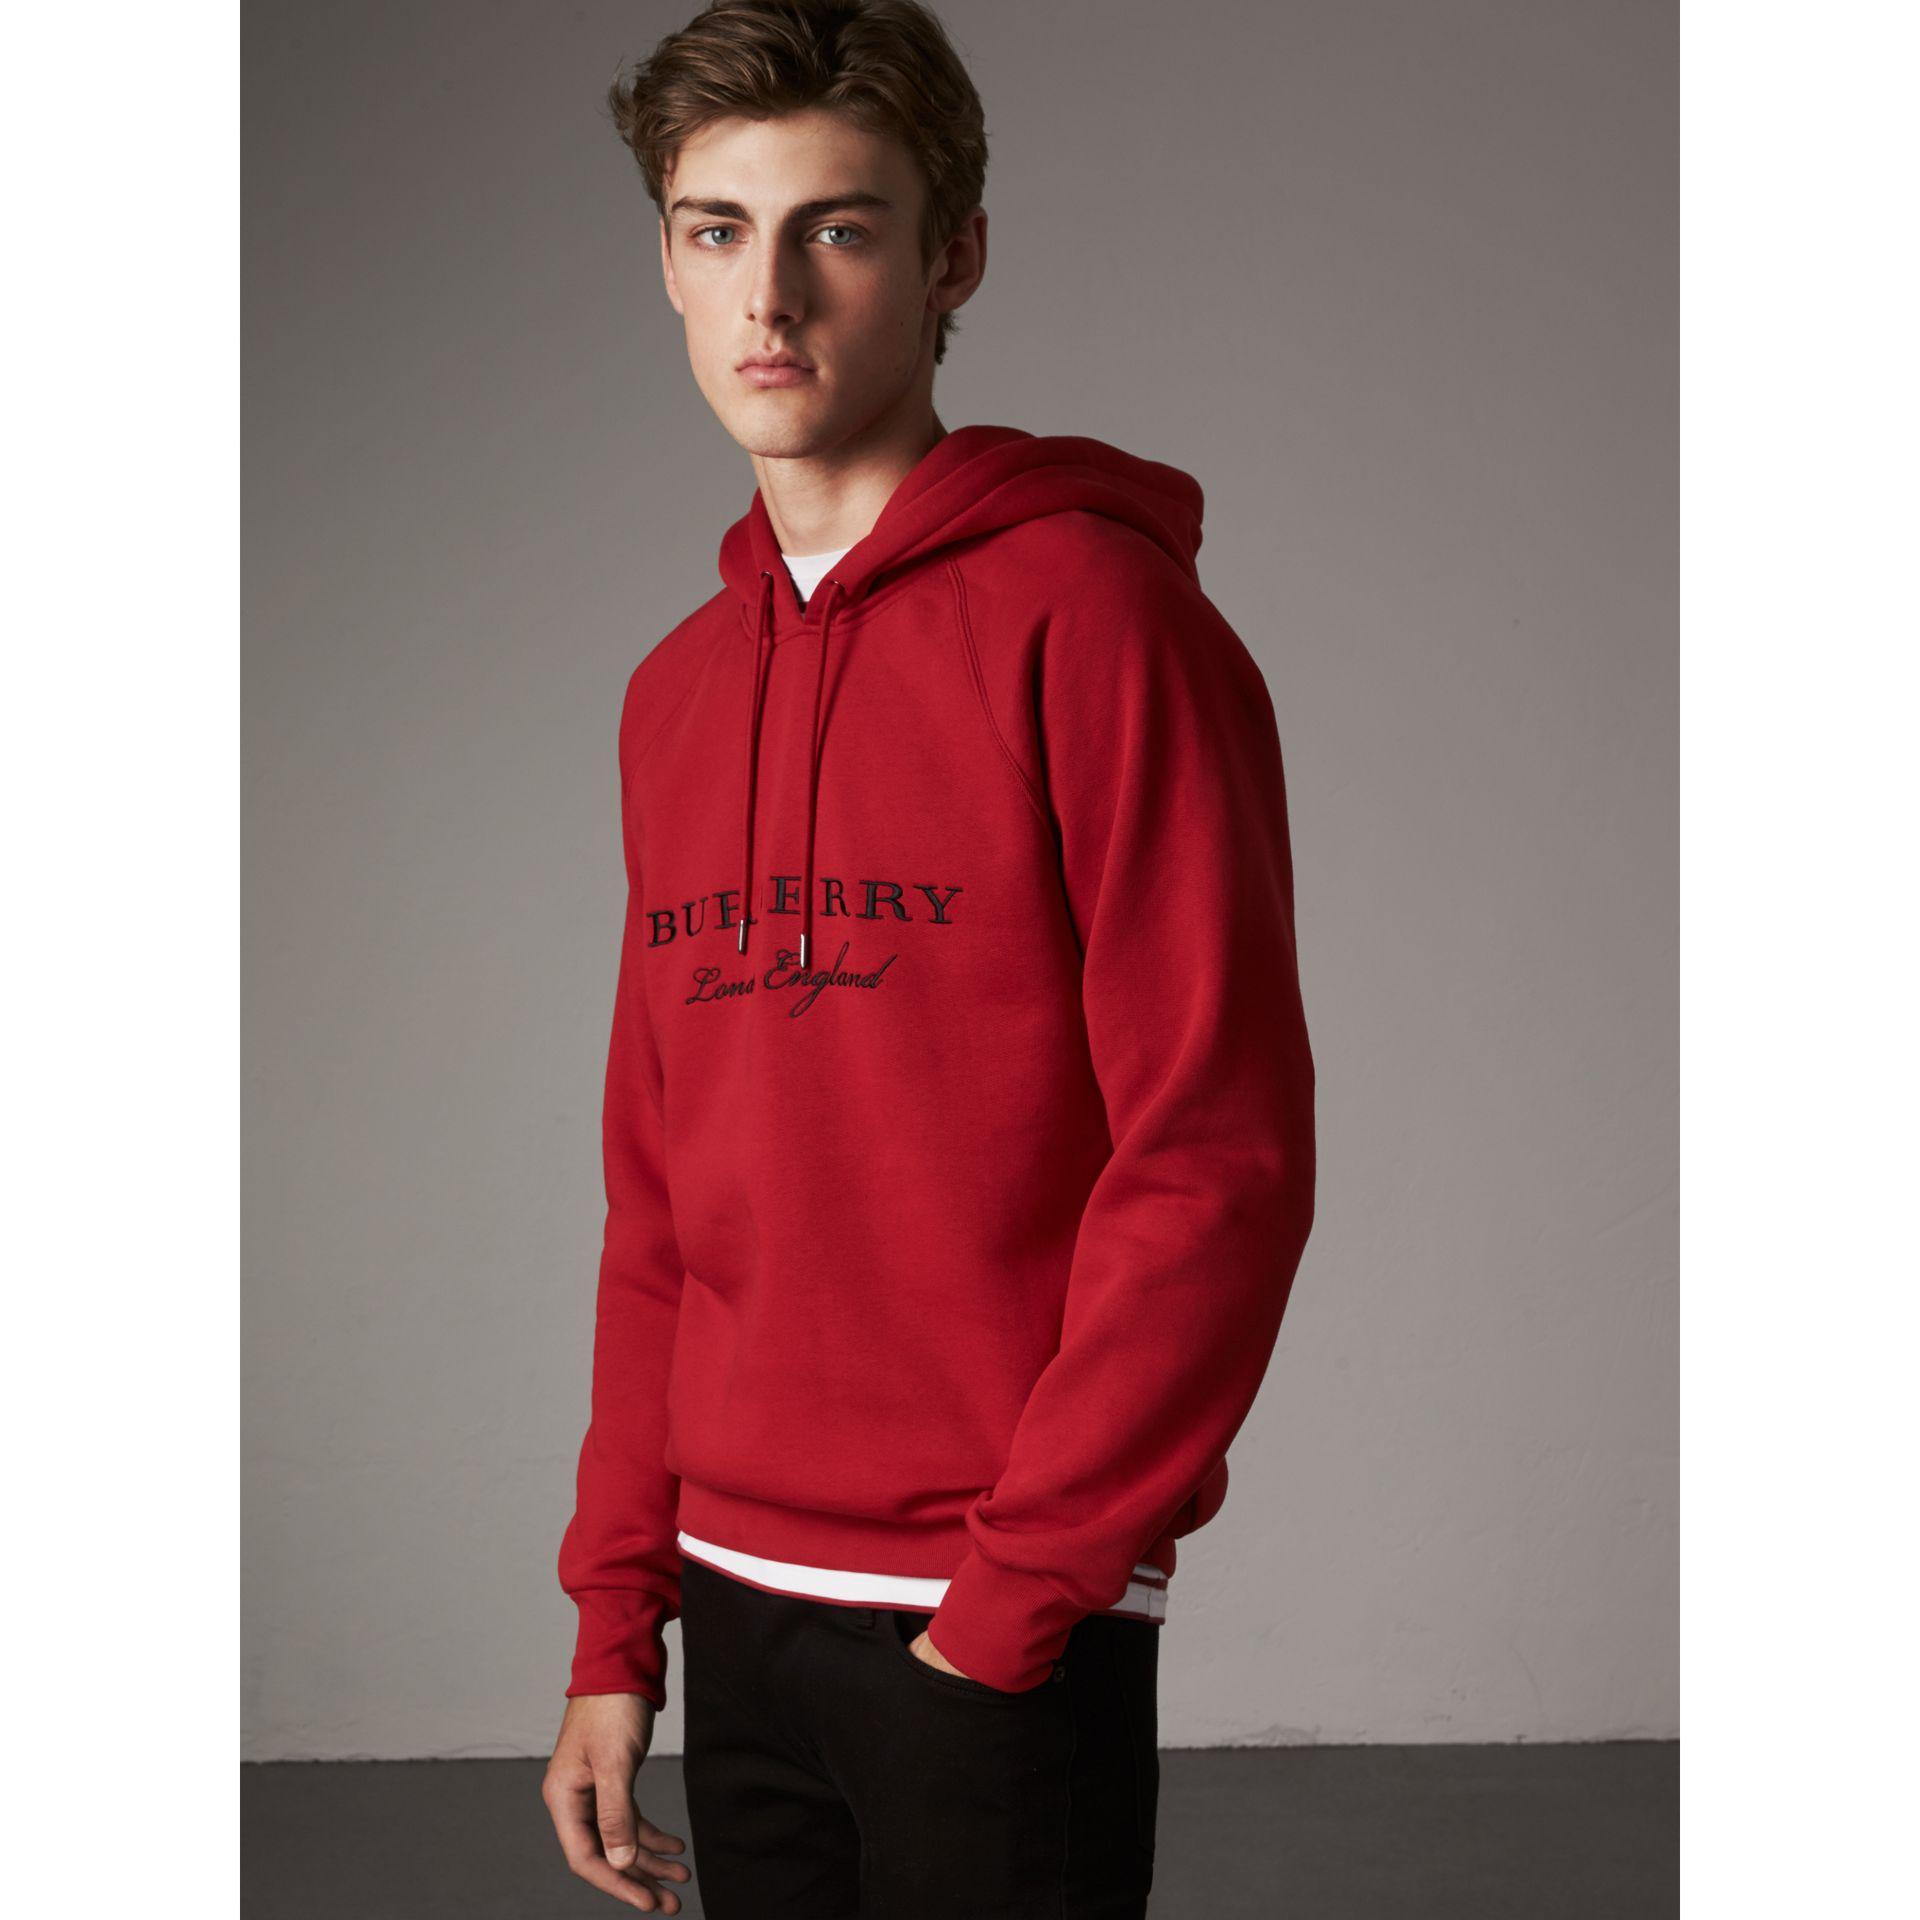 burberry sweatshirt red